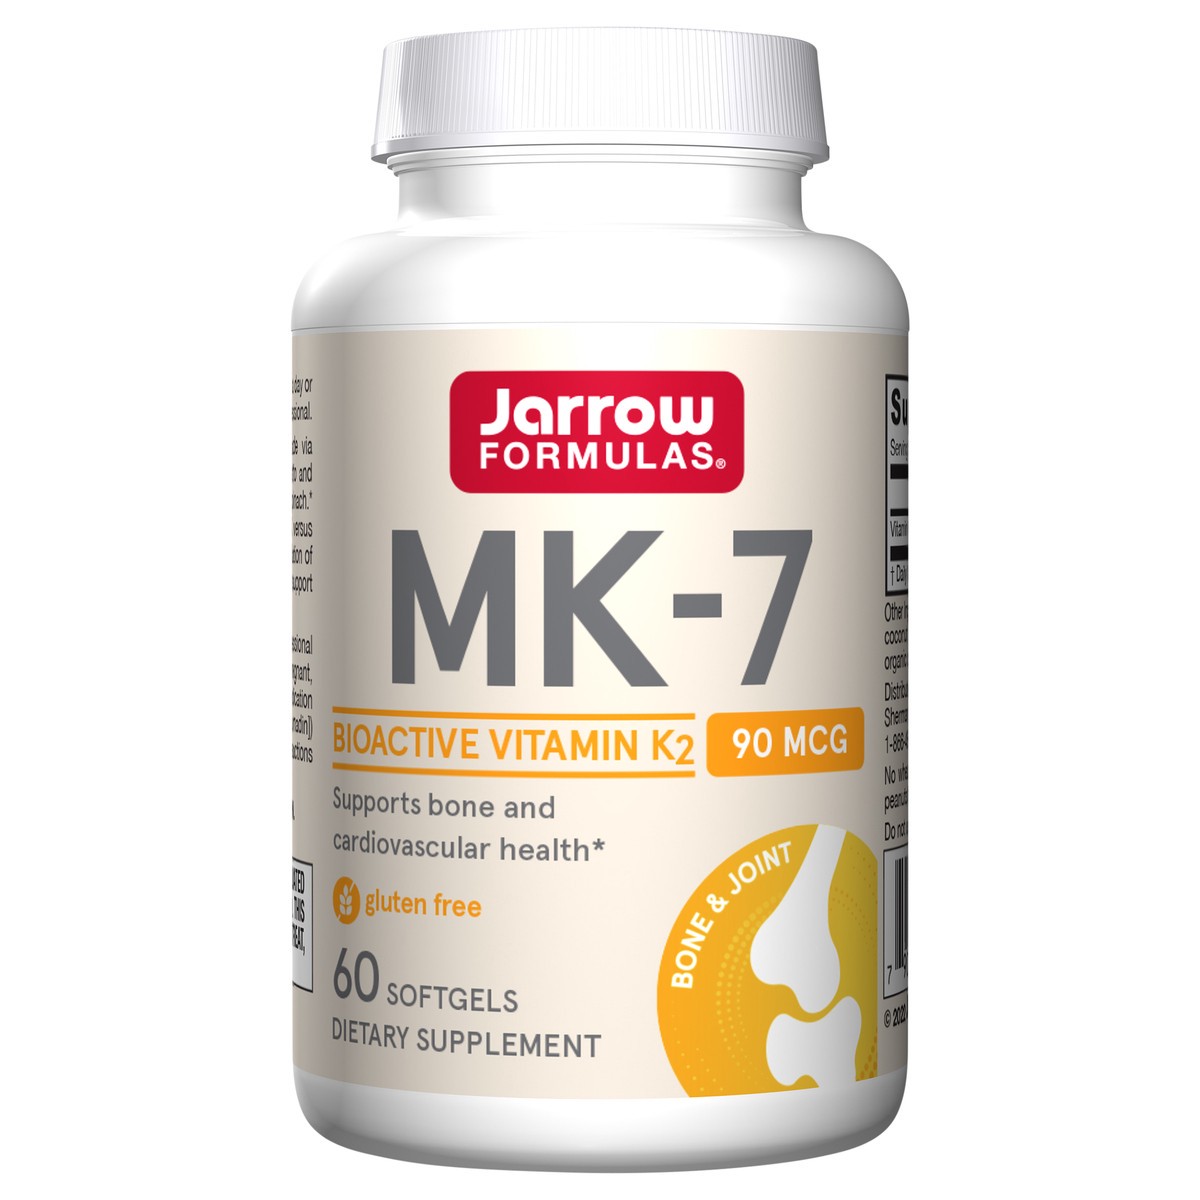 slide 1 of 4, Jarrow Formulas MK-7 90 mcg - Bioactive Form of Vitamin K2 - 60 Servings (Softgels) - Support to Build Strong Bones & Cardiovascular Health - Dietary Supplement - Gluten Free, 60 ct